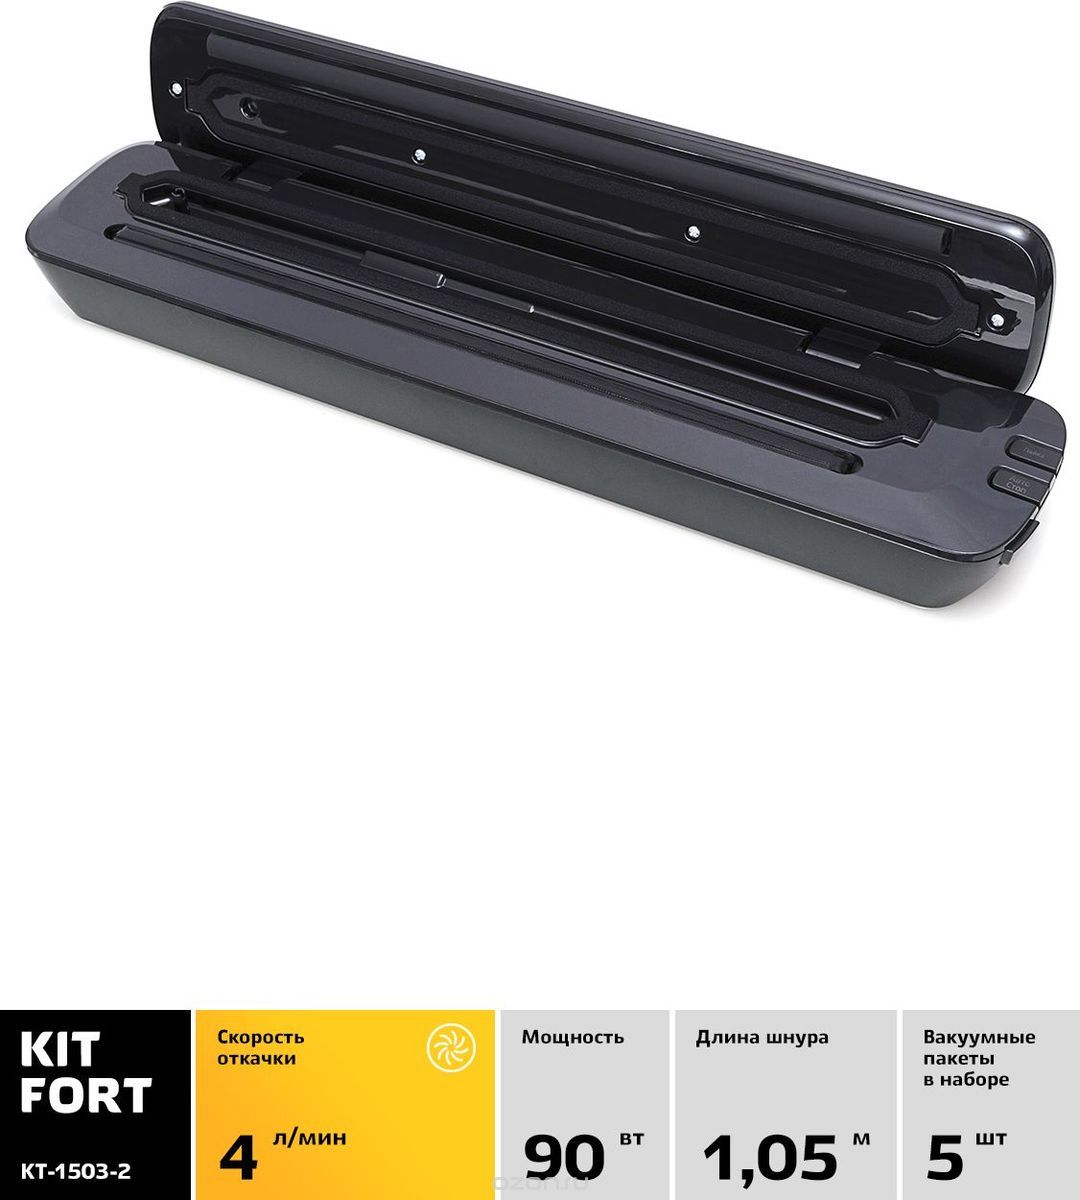   Kitfort -1503-2, Black